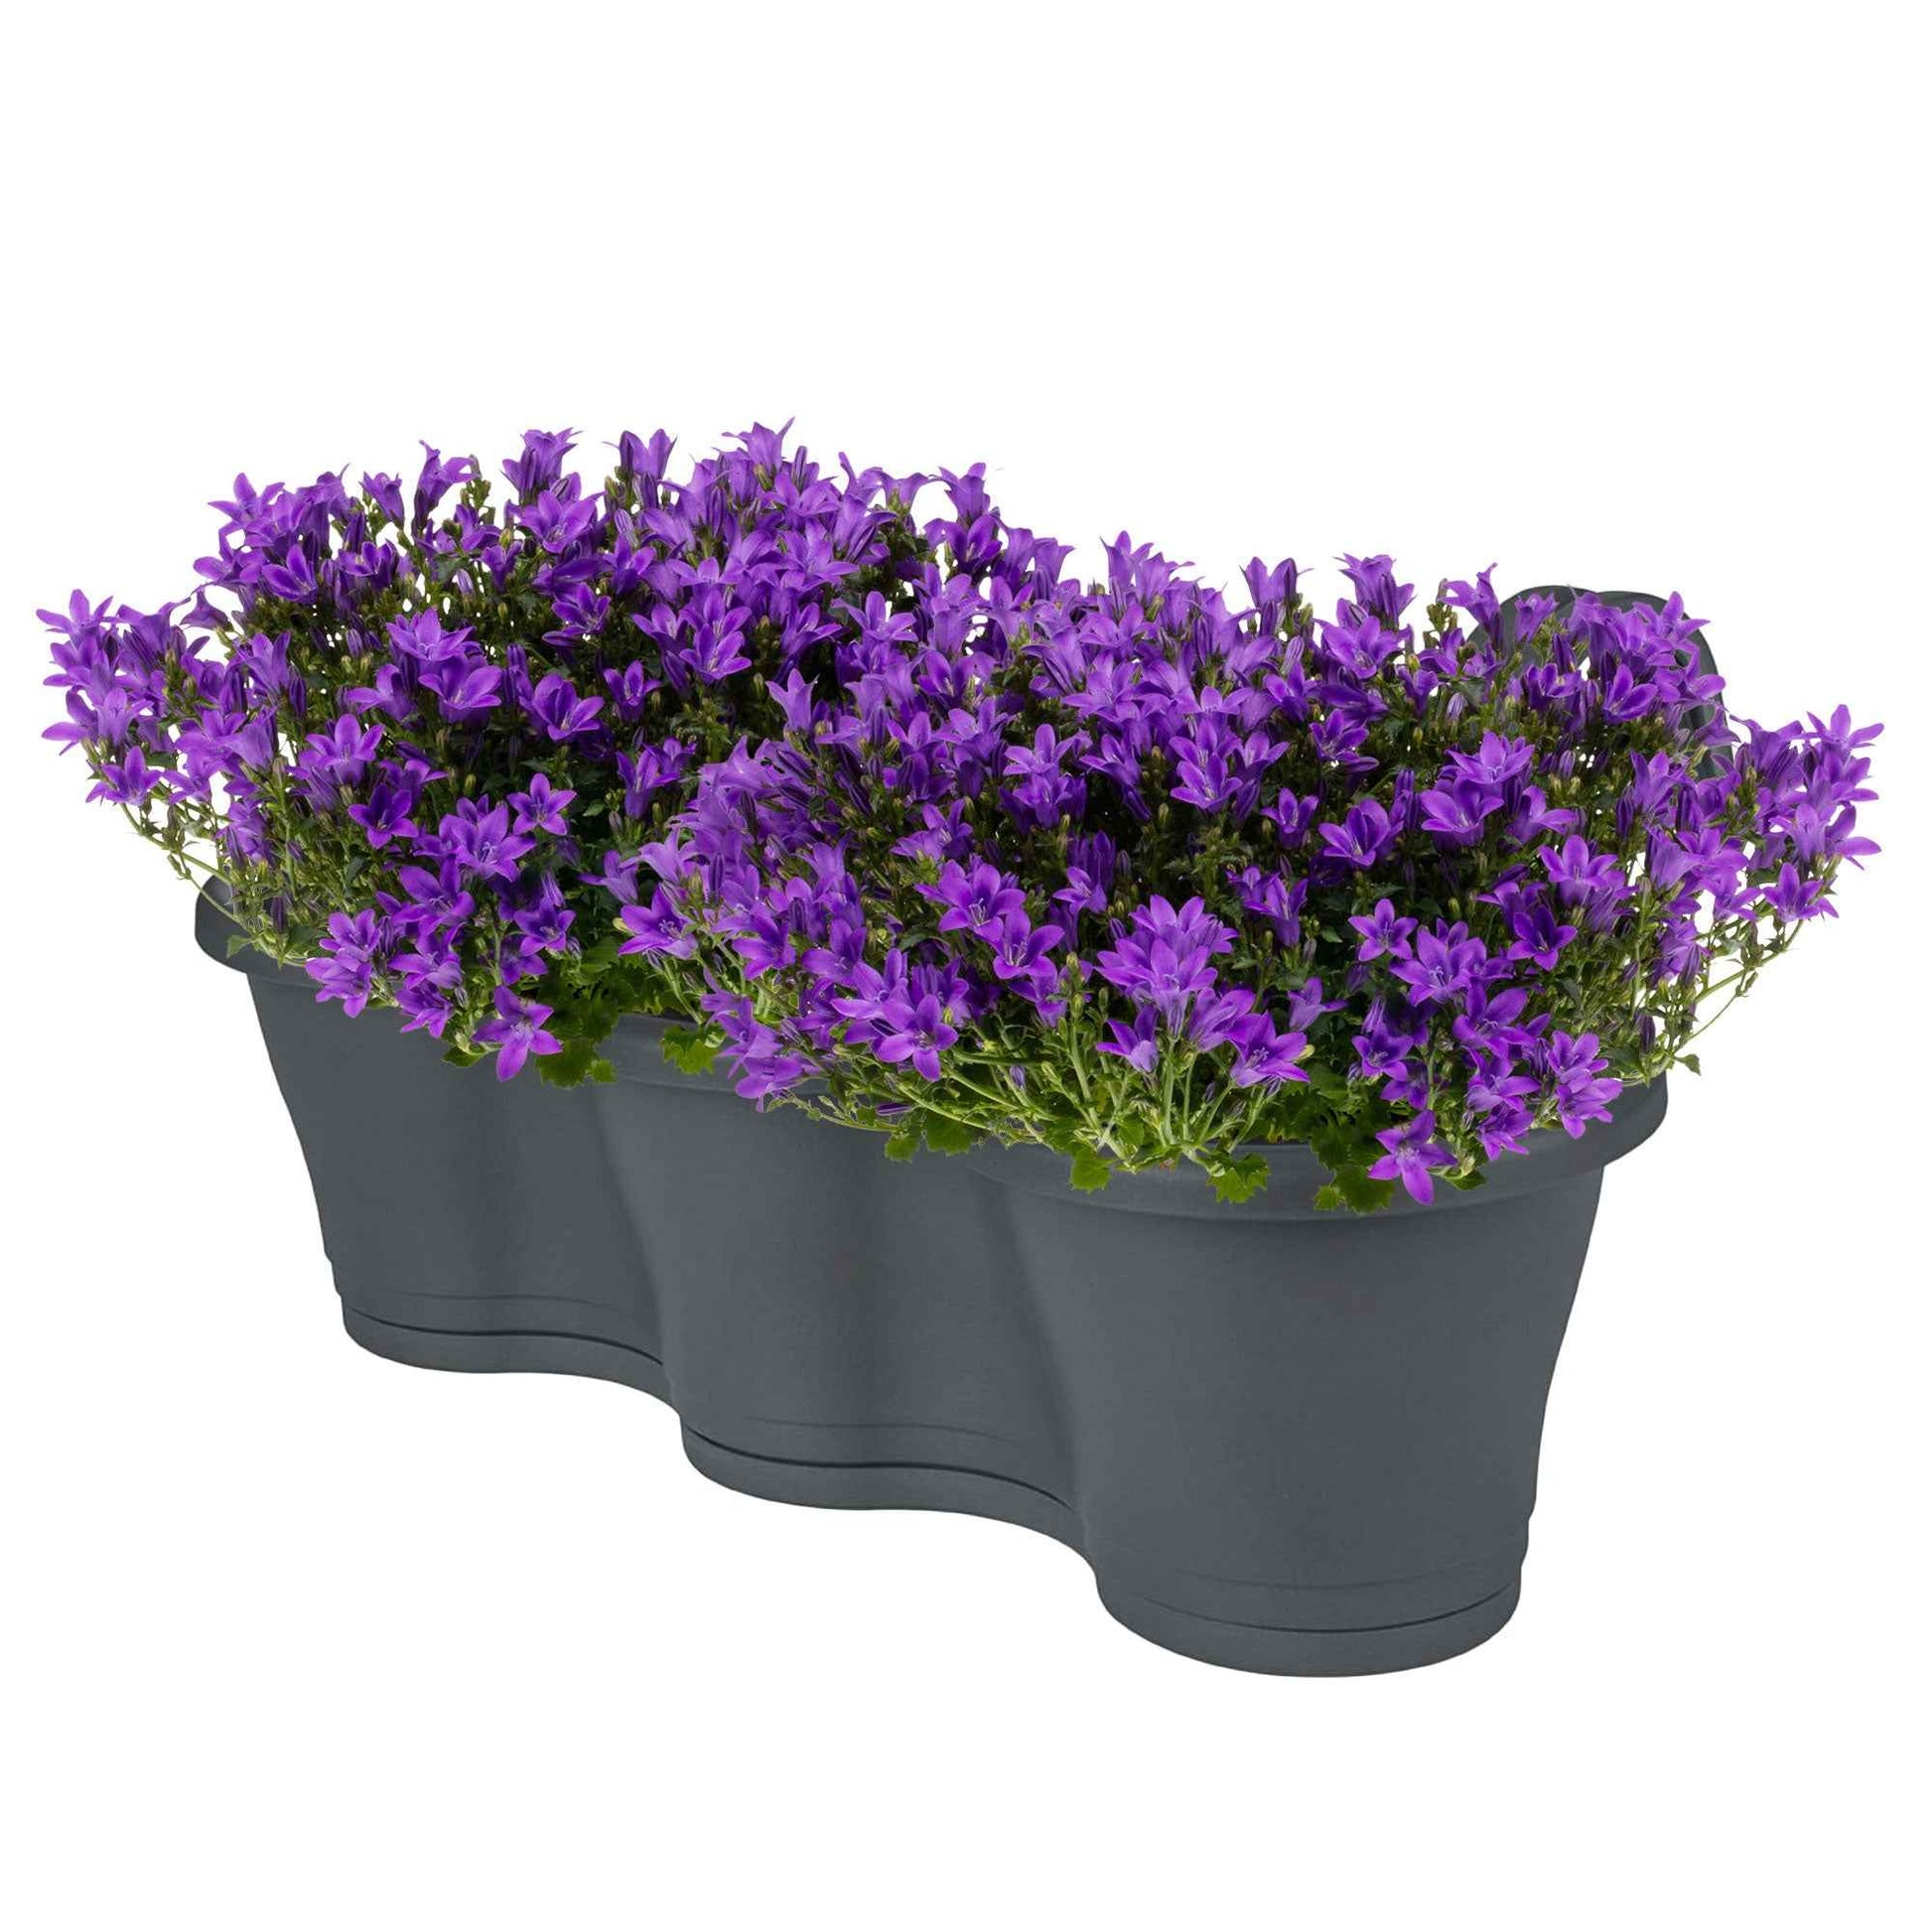 3x Campanule Campanula 'Ambella Intense Purple' violet avec jardinière anthracite - Campanule en pot décoratif